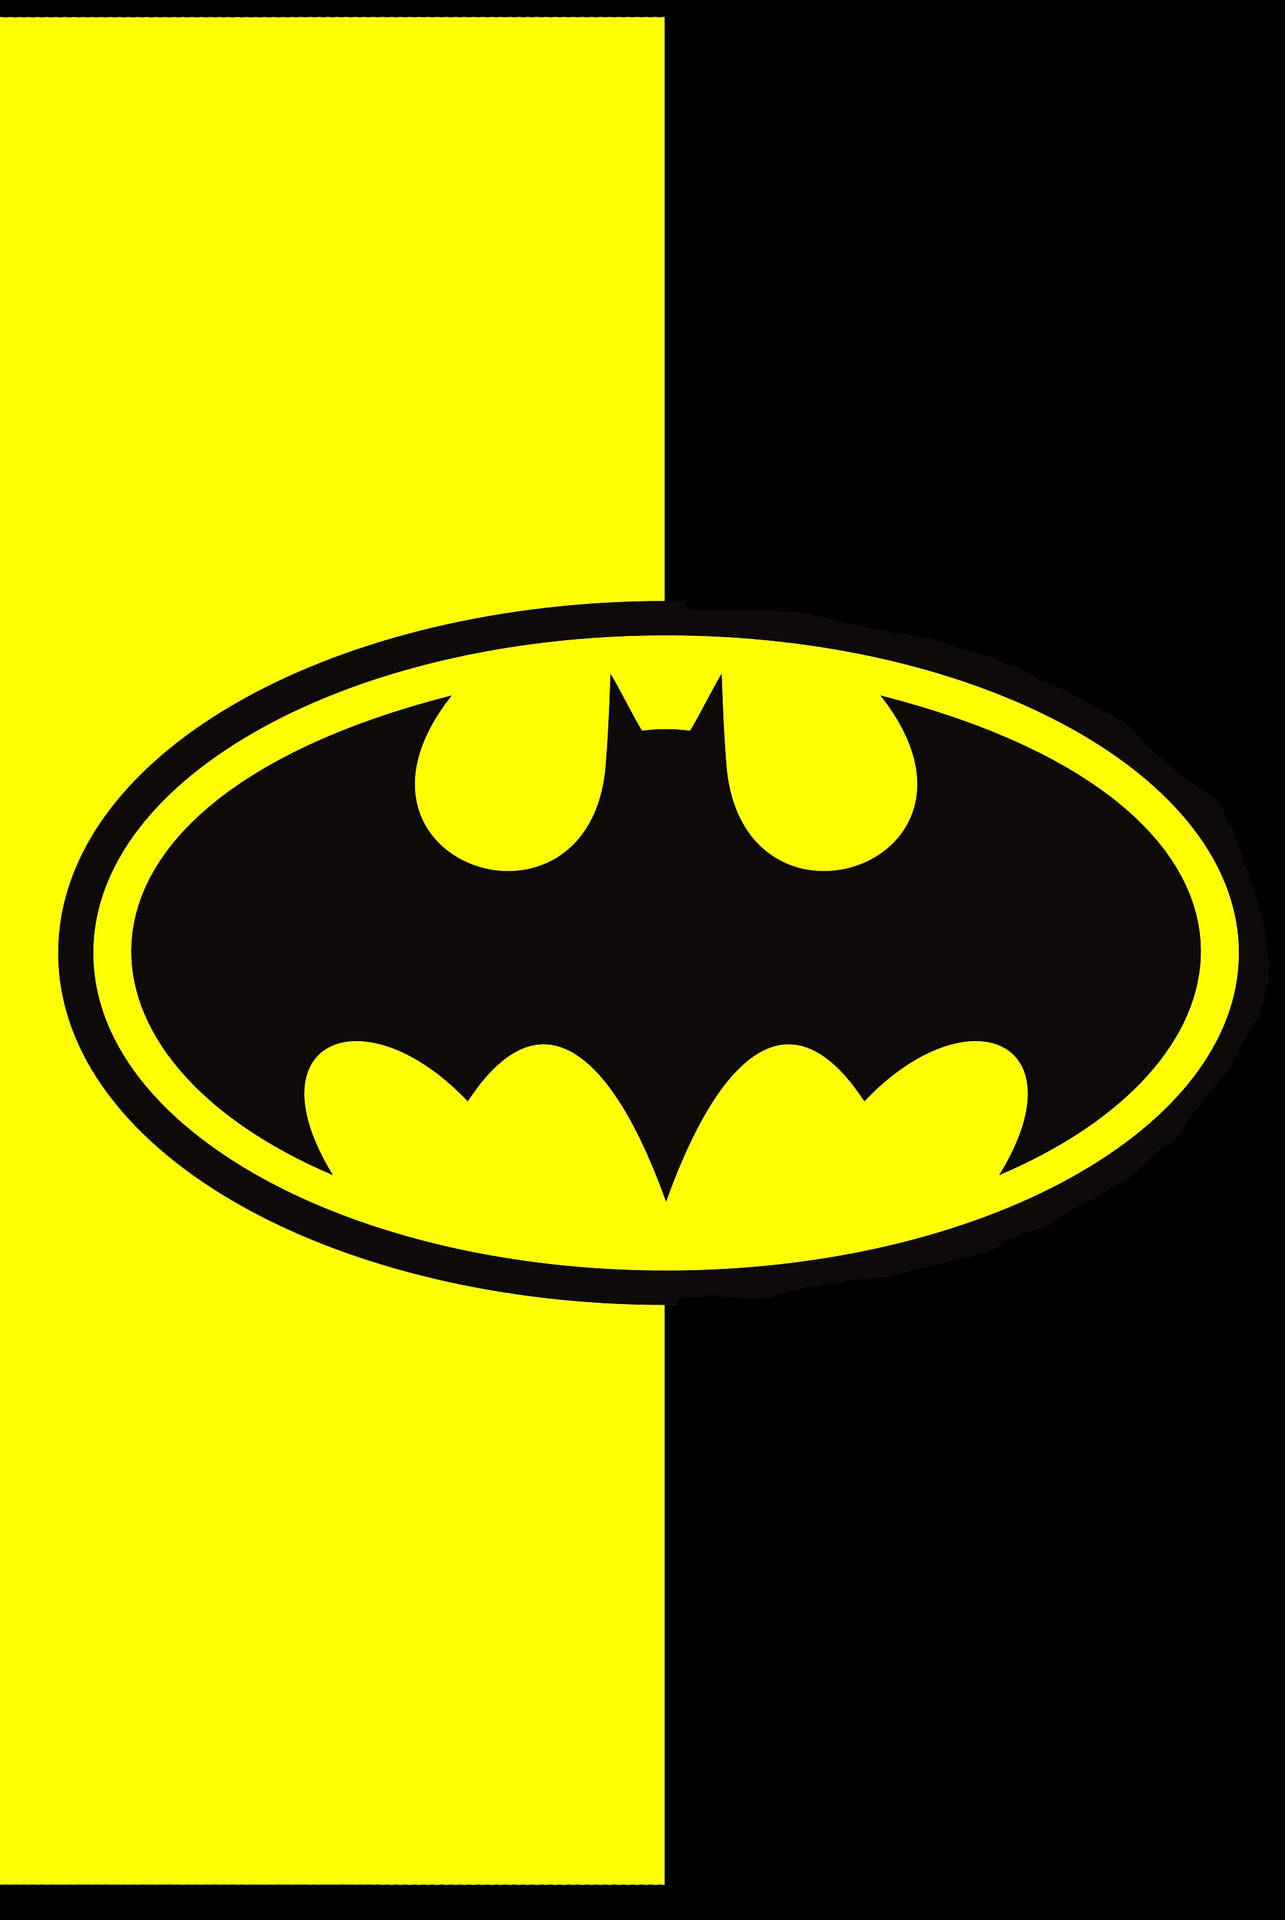 Download Black And Yellow Batman Logo Iphone Wallpaper 